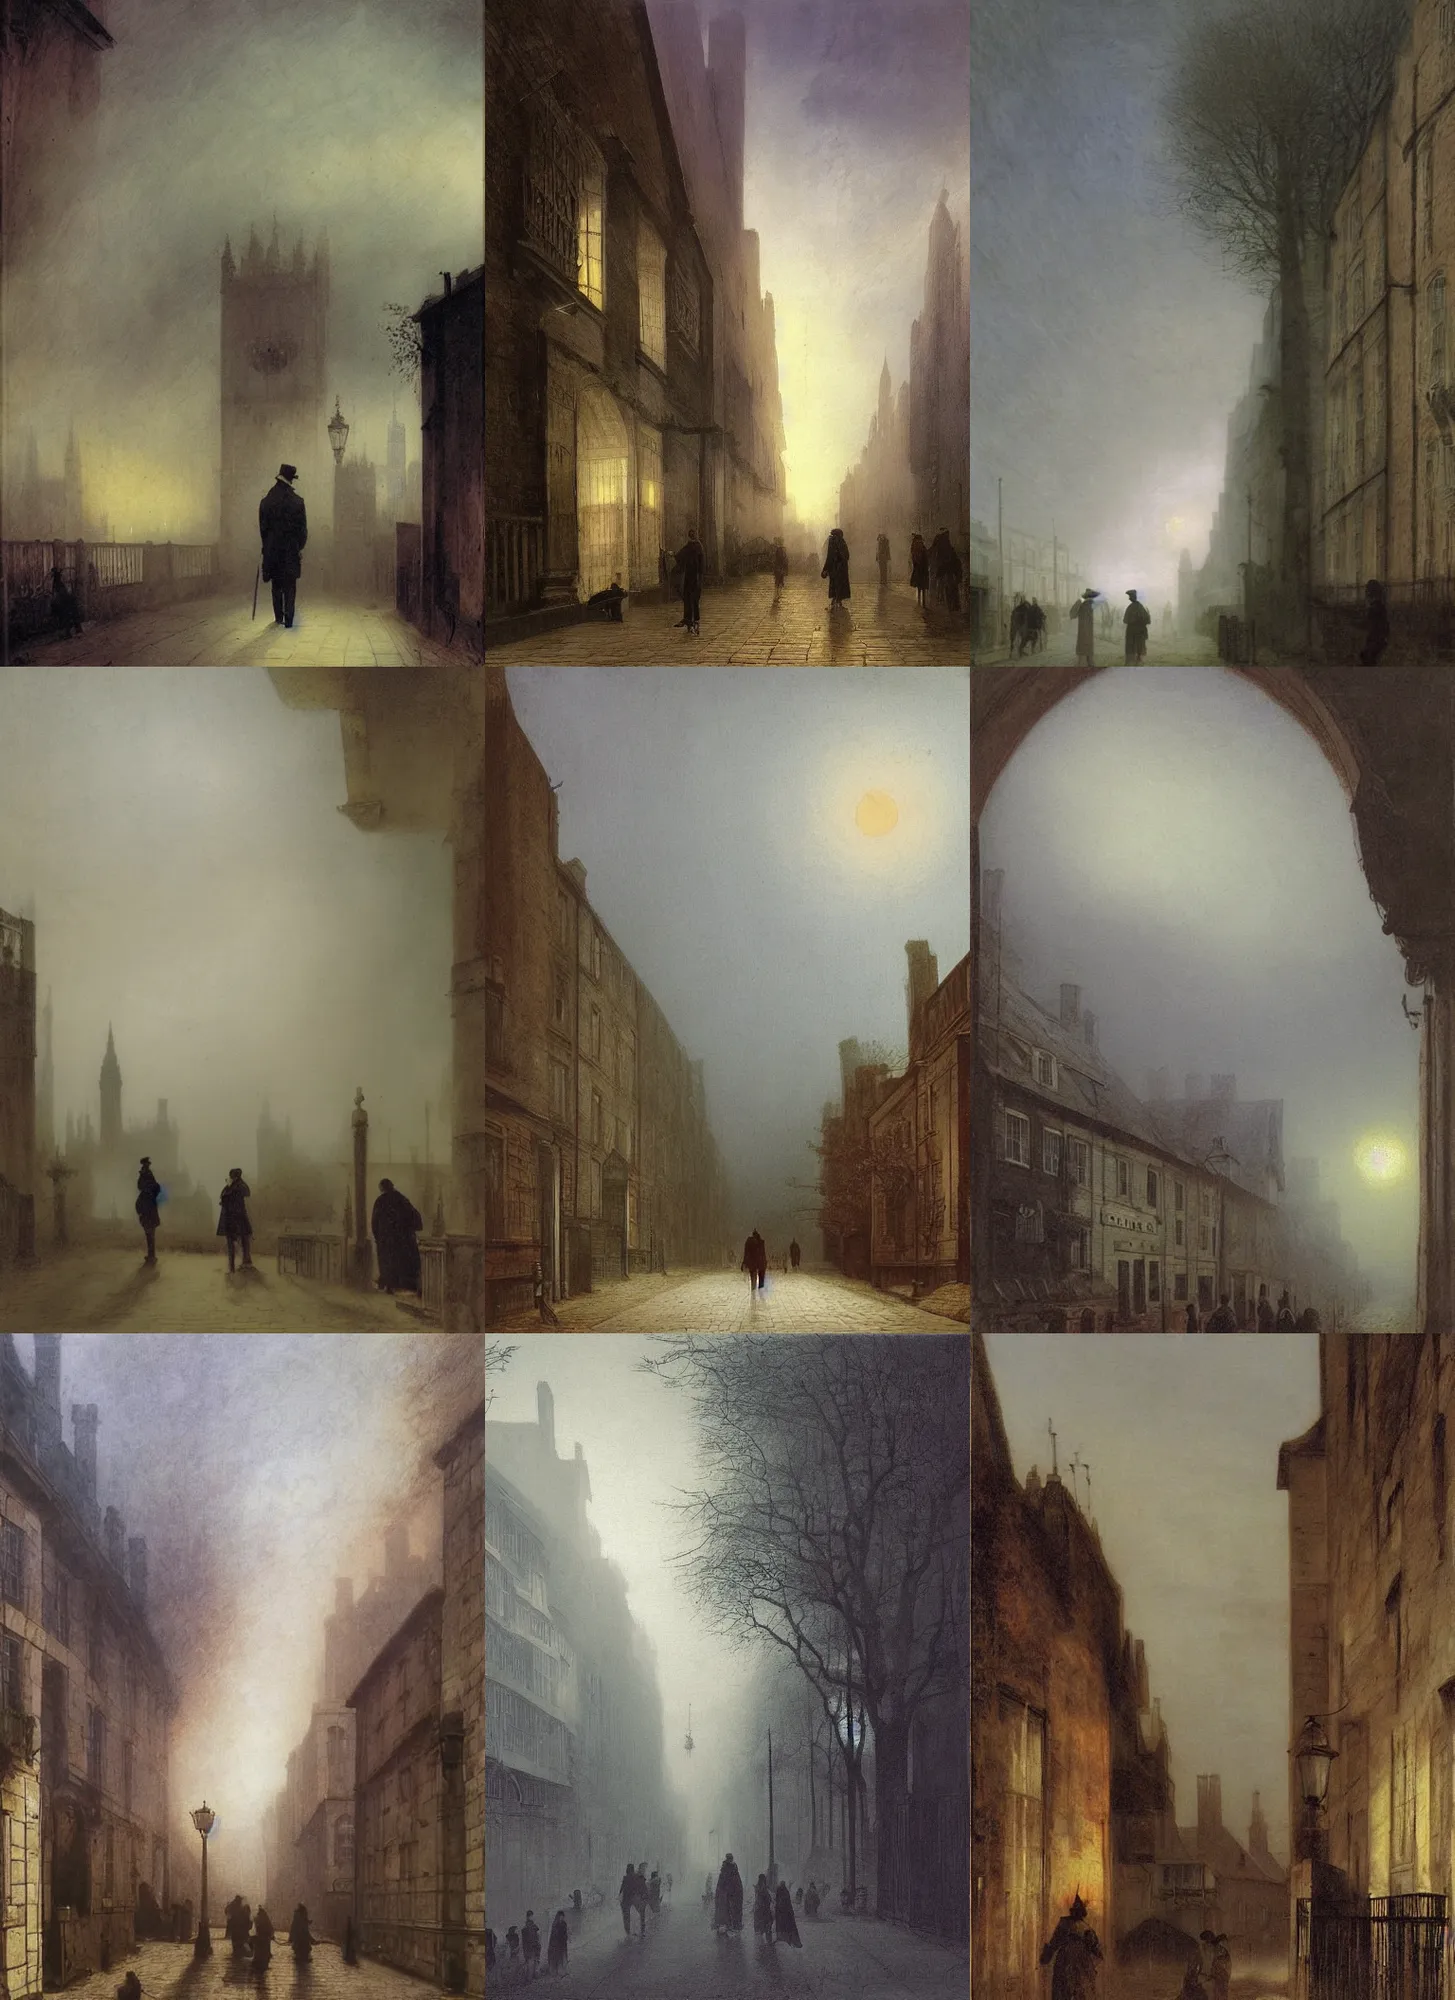 Image similar to 1 9 th century london, shady alleys, pub, thick fog, coherent composition art by caspar david friedrich, thomas lawrence, john martin